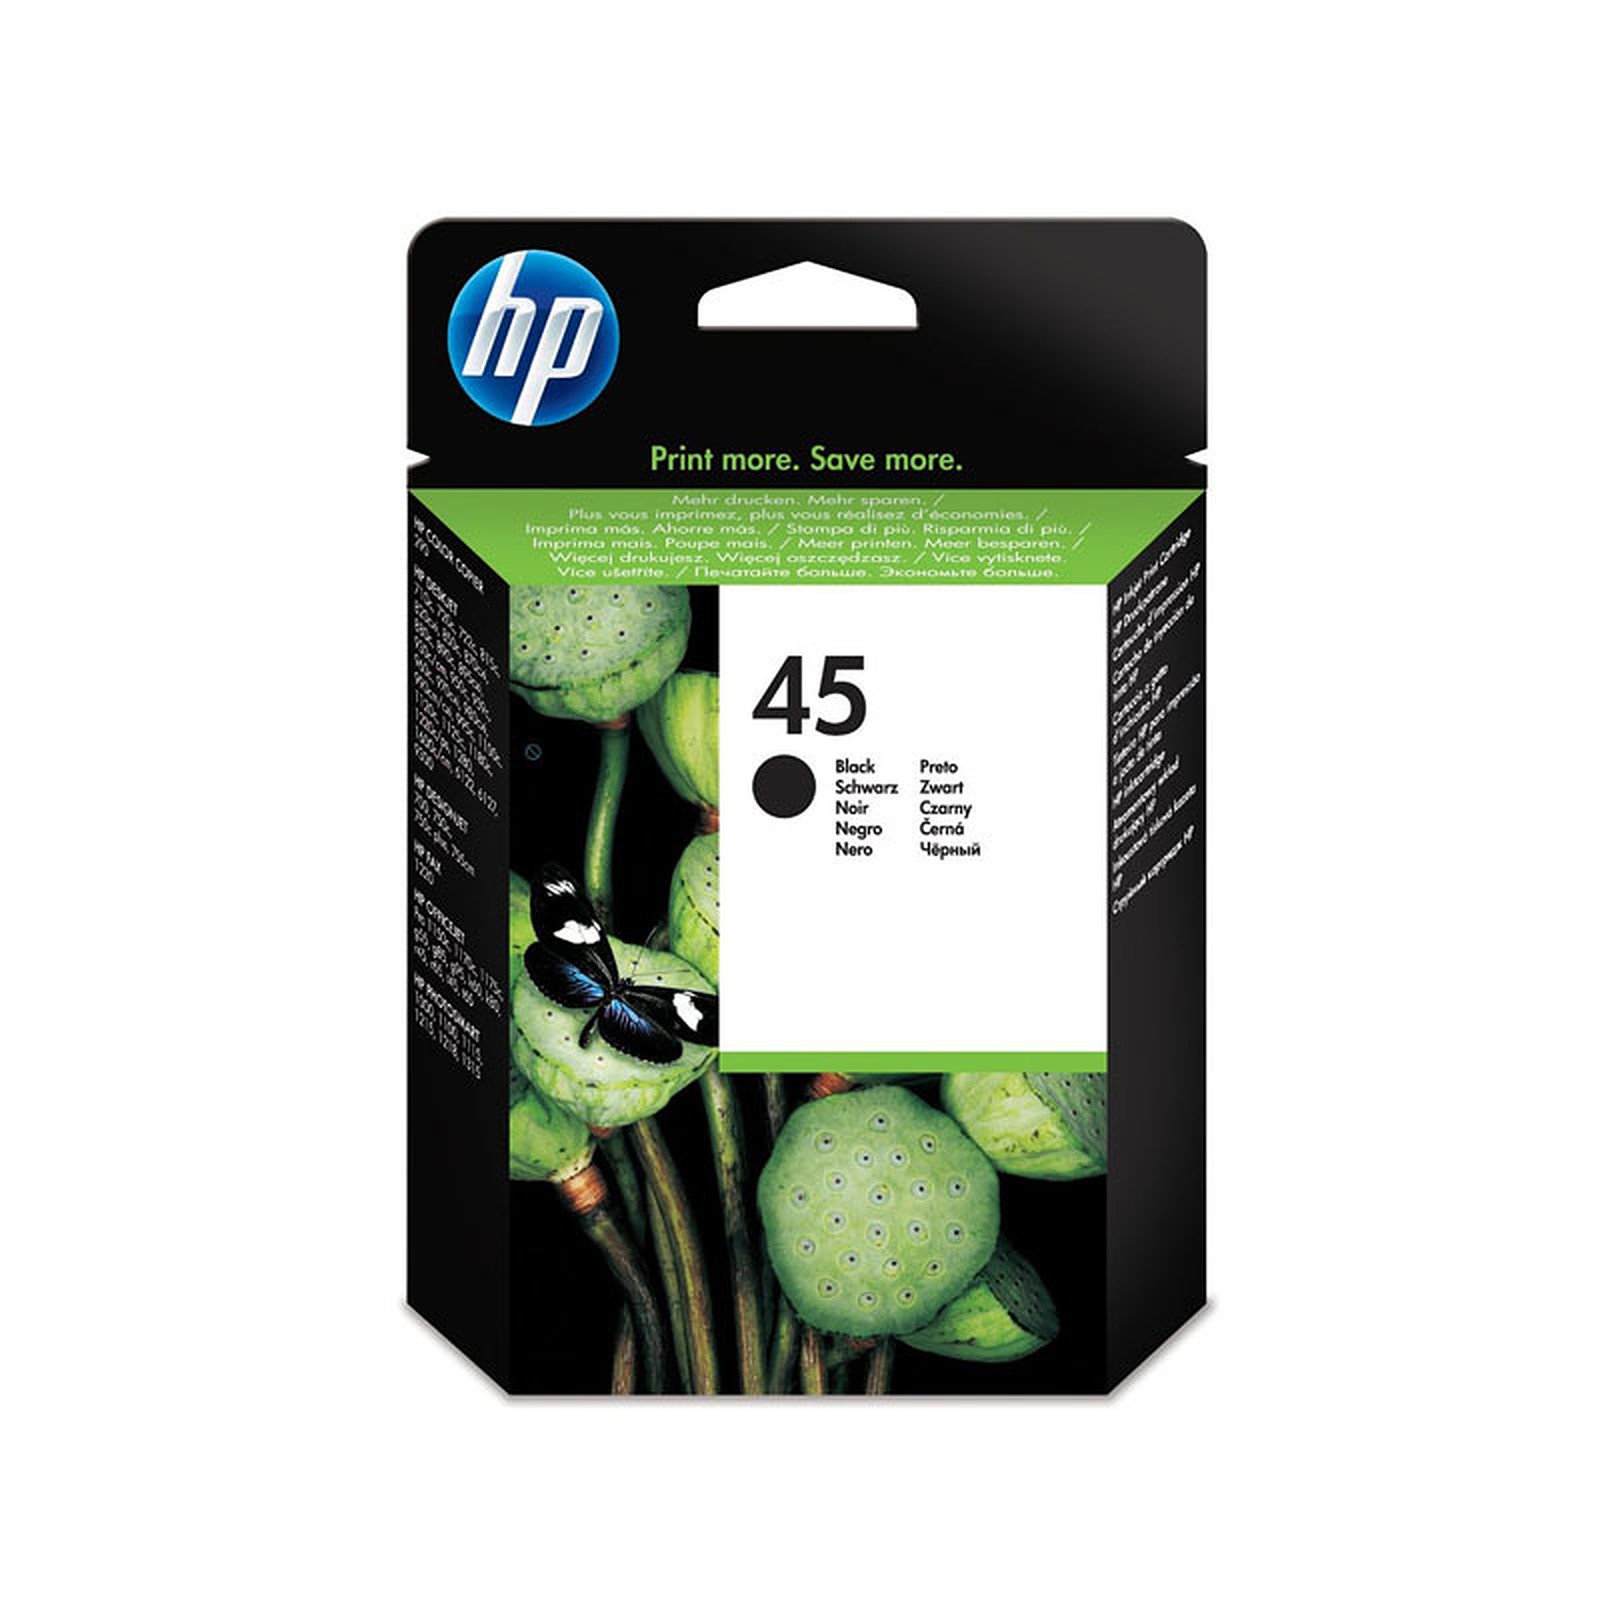 HP 45 (51645AE) - Noir - Cartouche imprimante HP